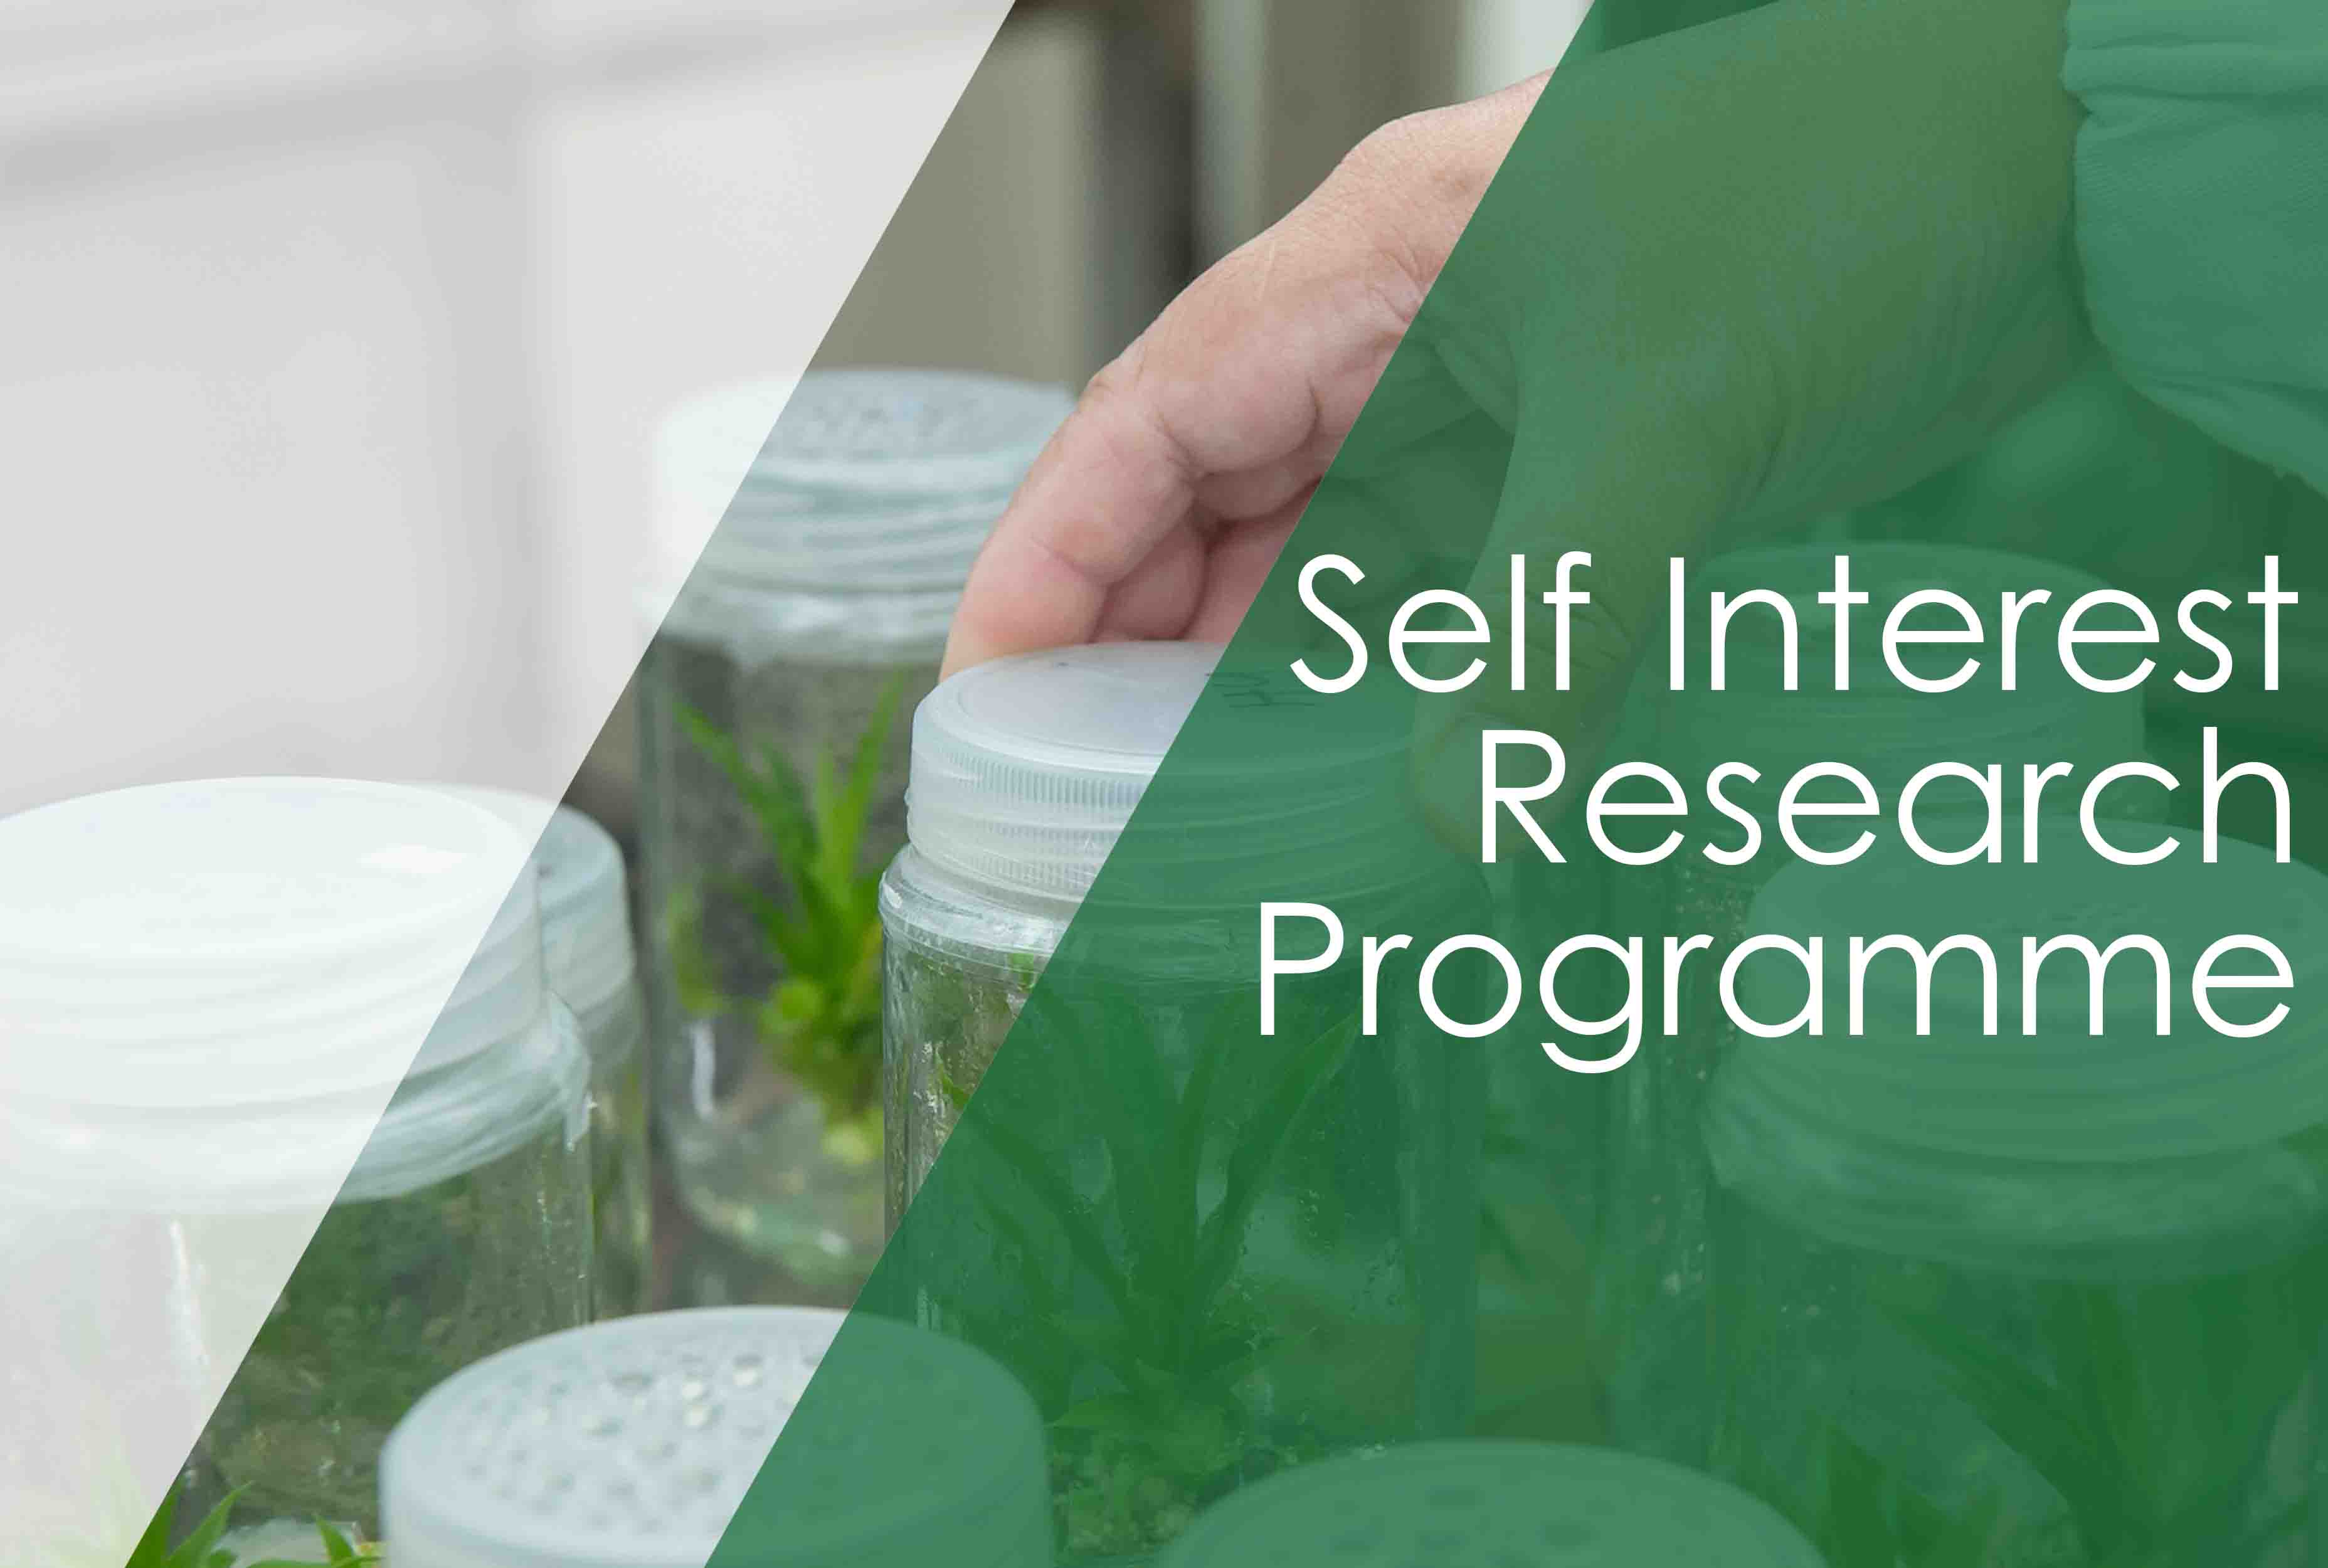 Self interest research programme